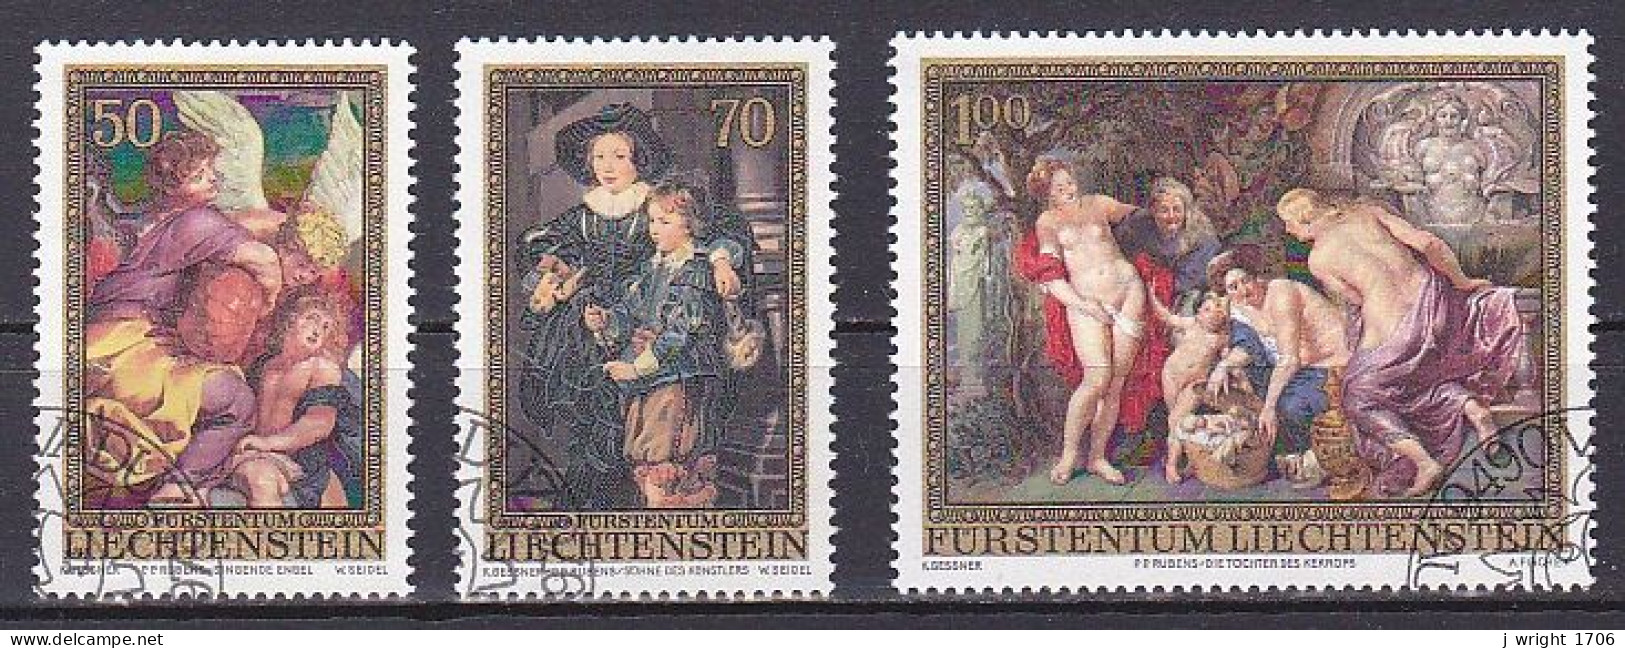 Liechtenstein, 1976, Peter Paul Rubens, Set, CTO - Gebruikt